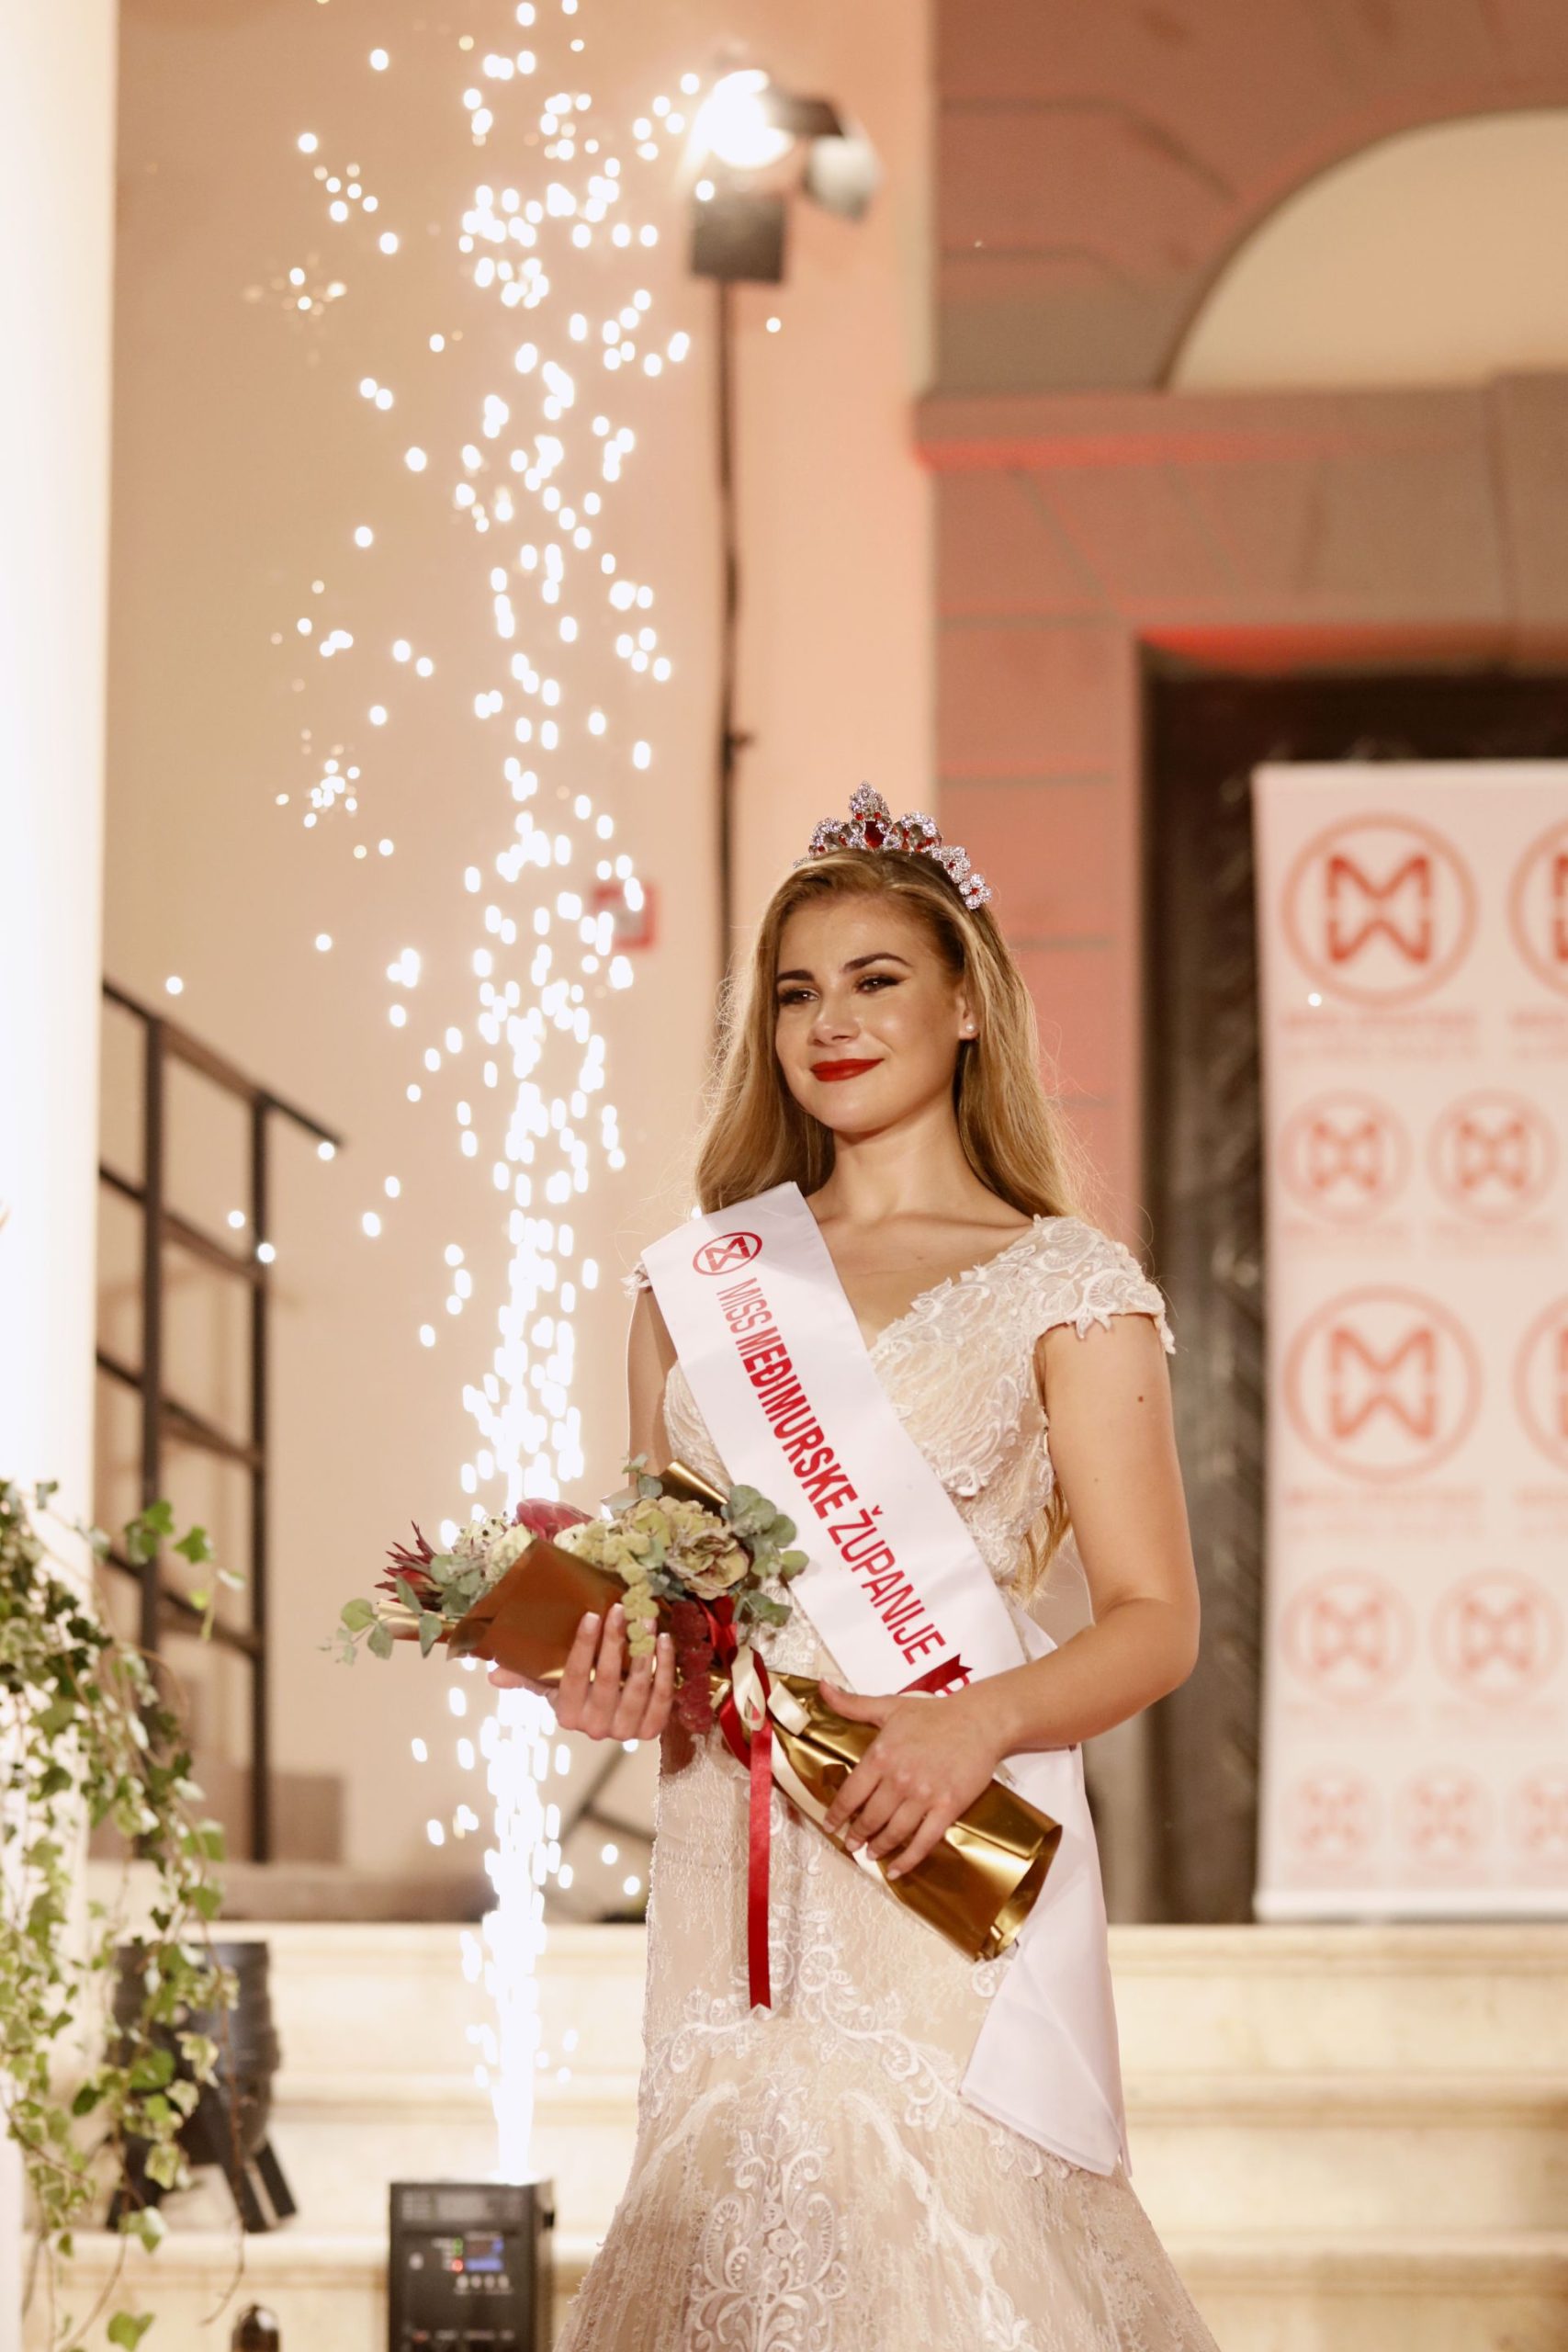 Međimurje crowns representative for Miss World Croatia title 